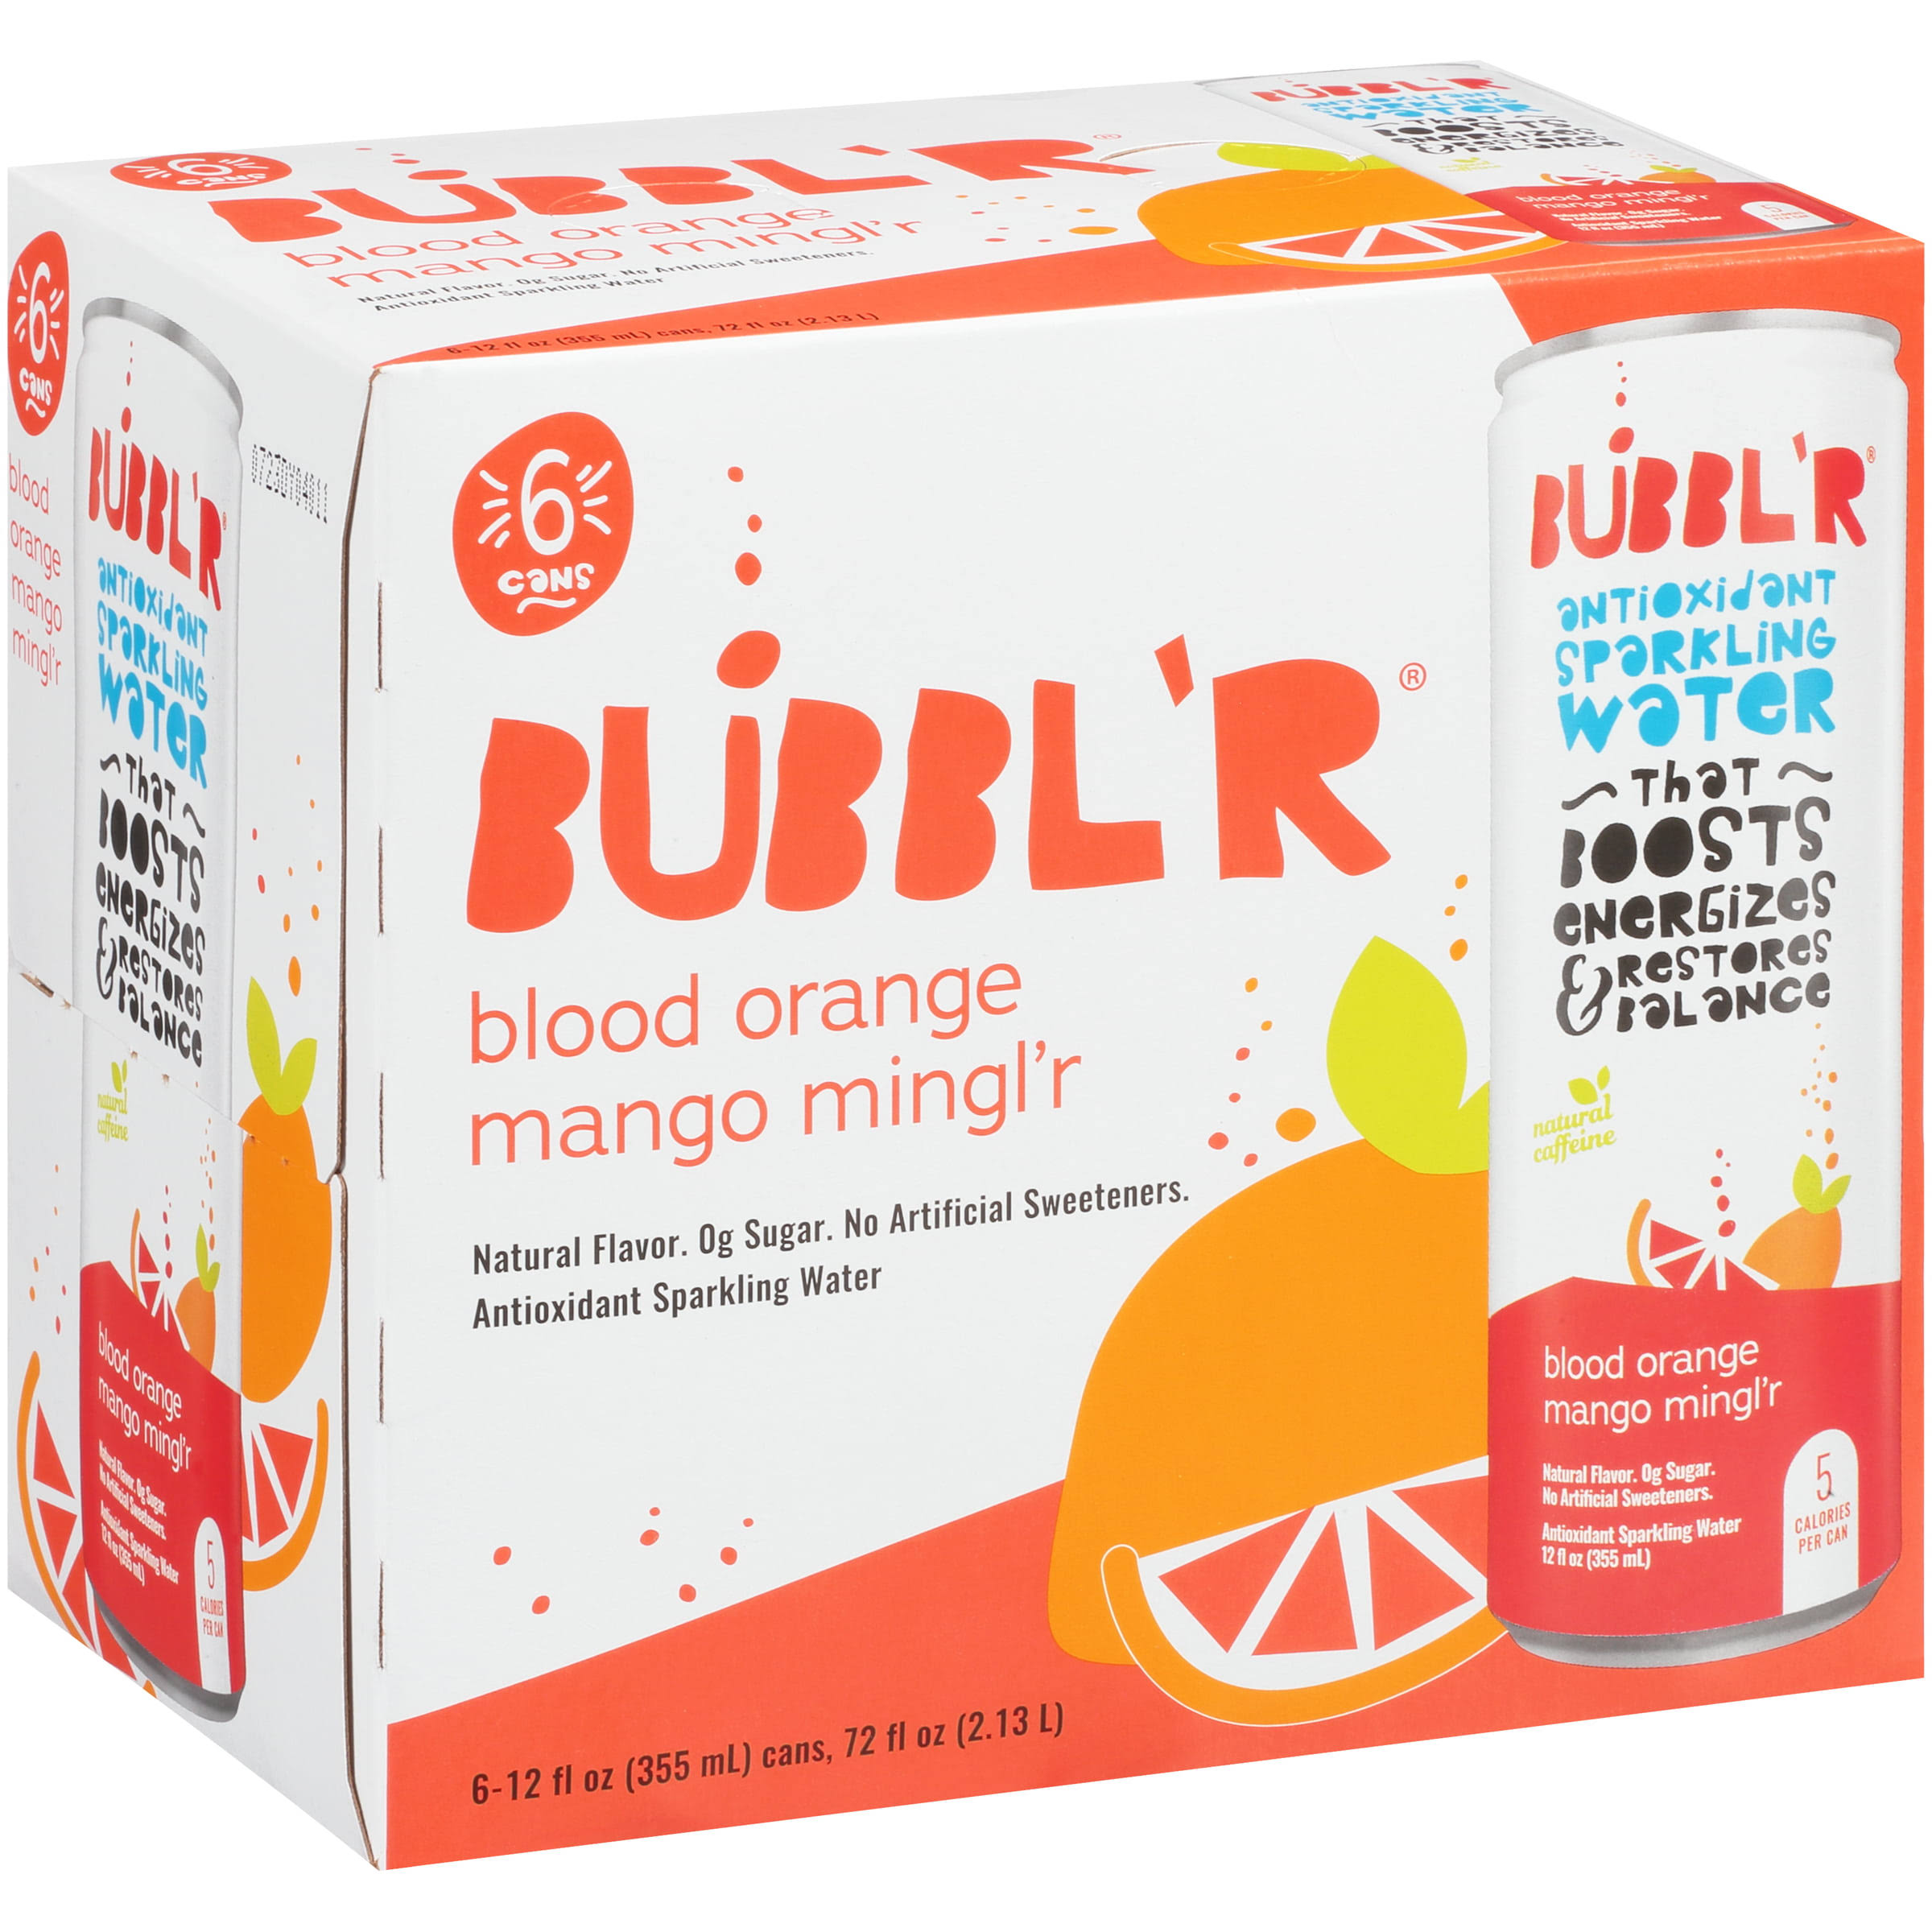 BUBBL'R Blood Orange Mango mingl'r Antioxidant Sparkling Water